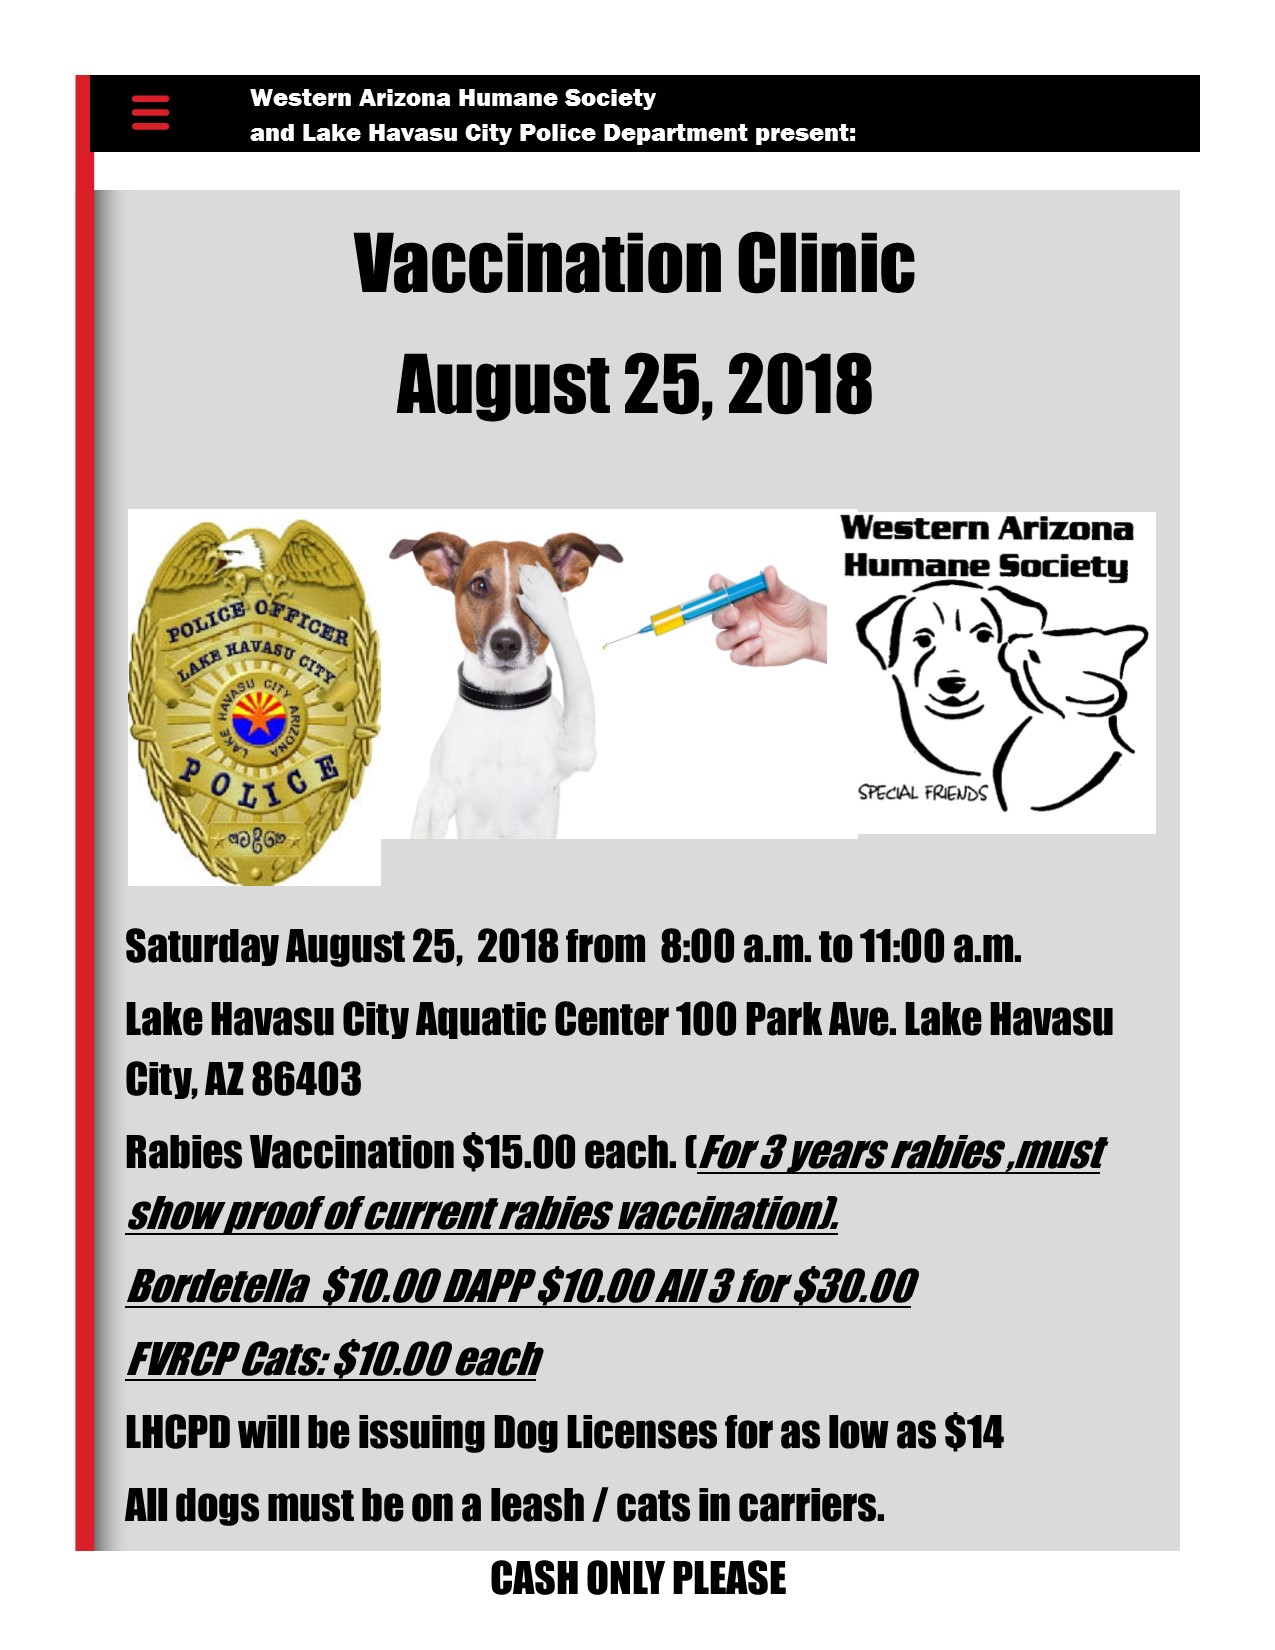 Western Arizona Humane Society Shot Clinic